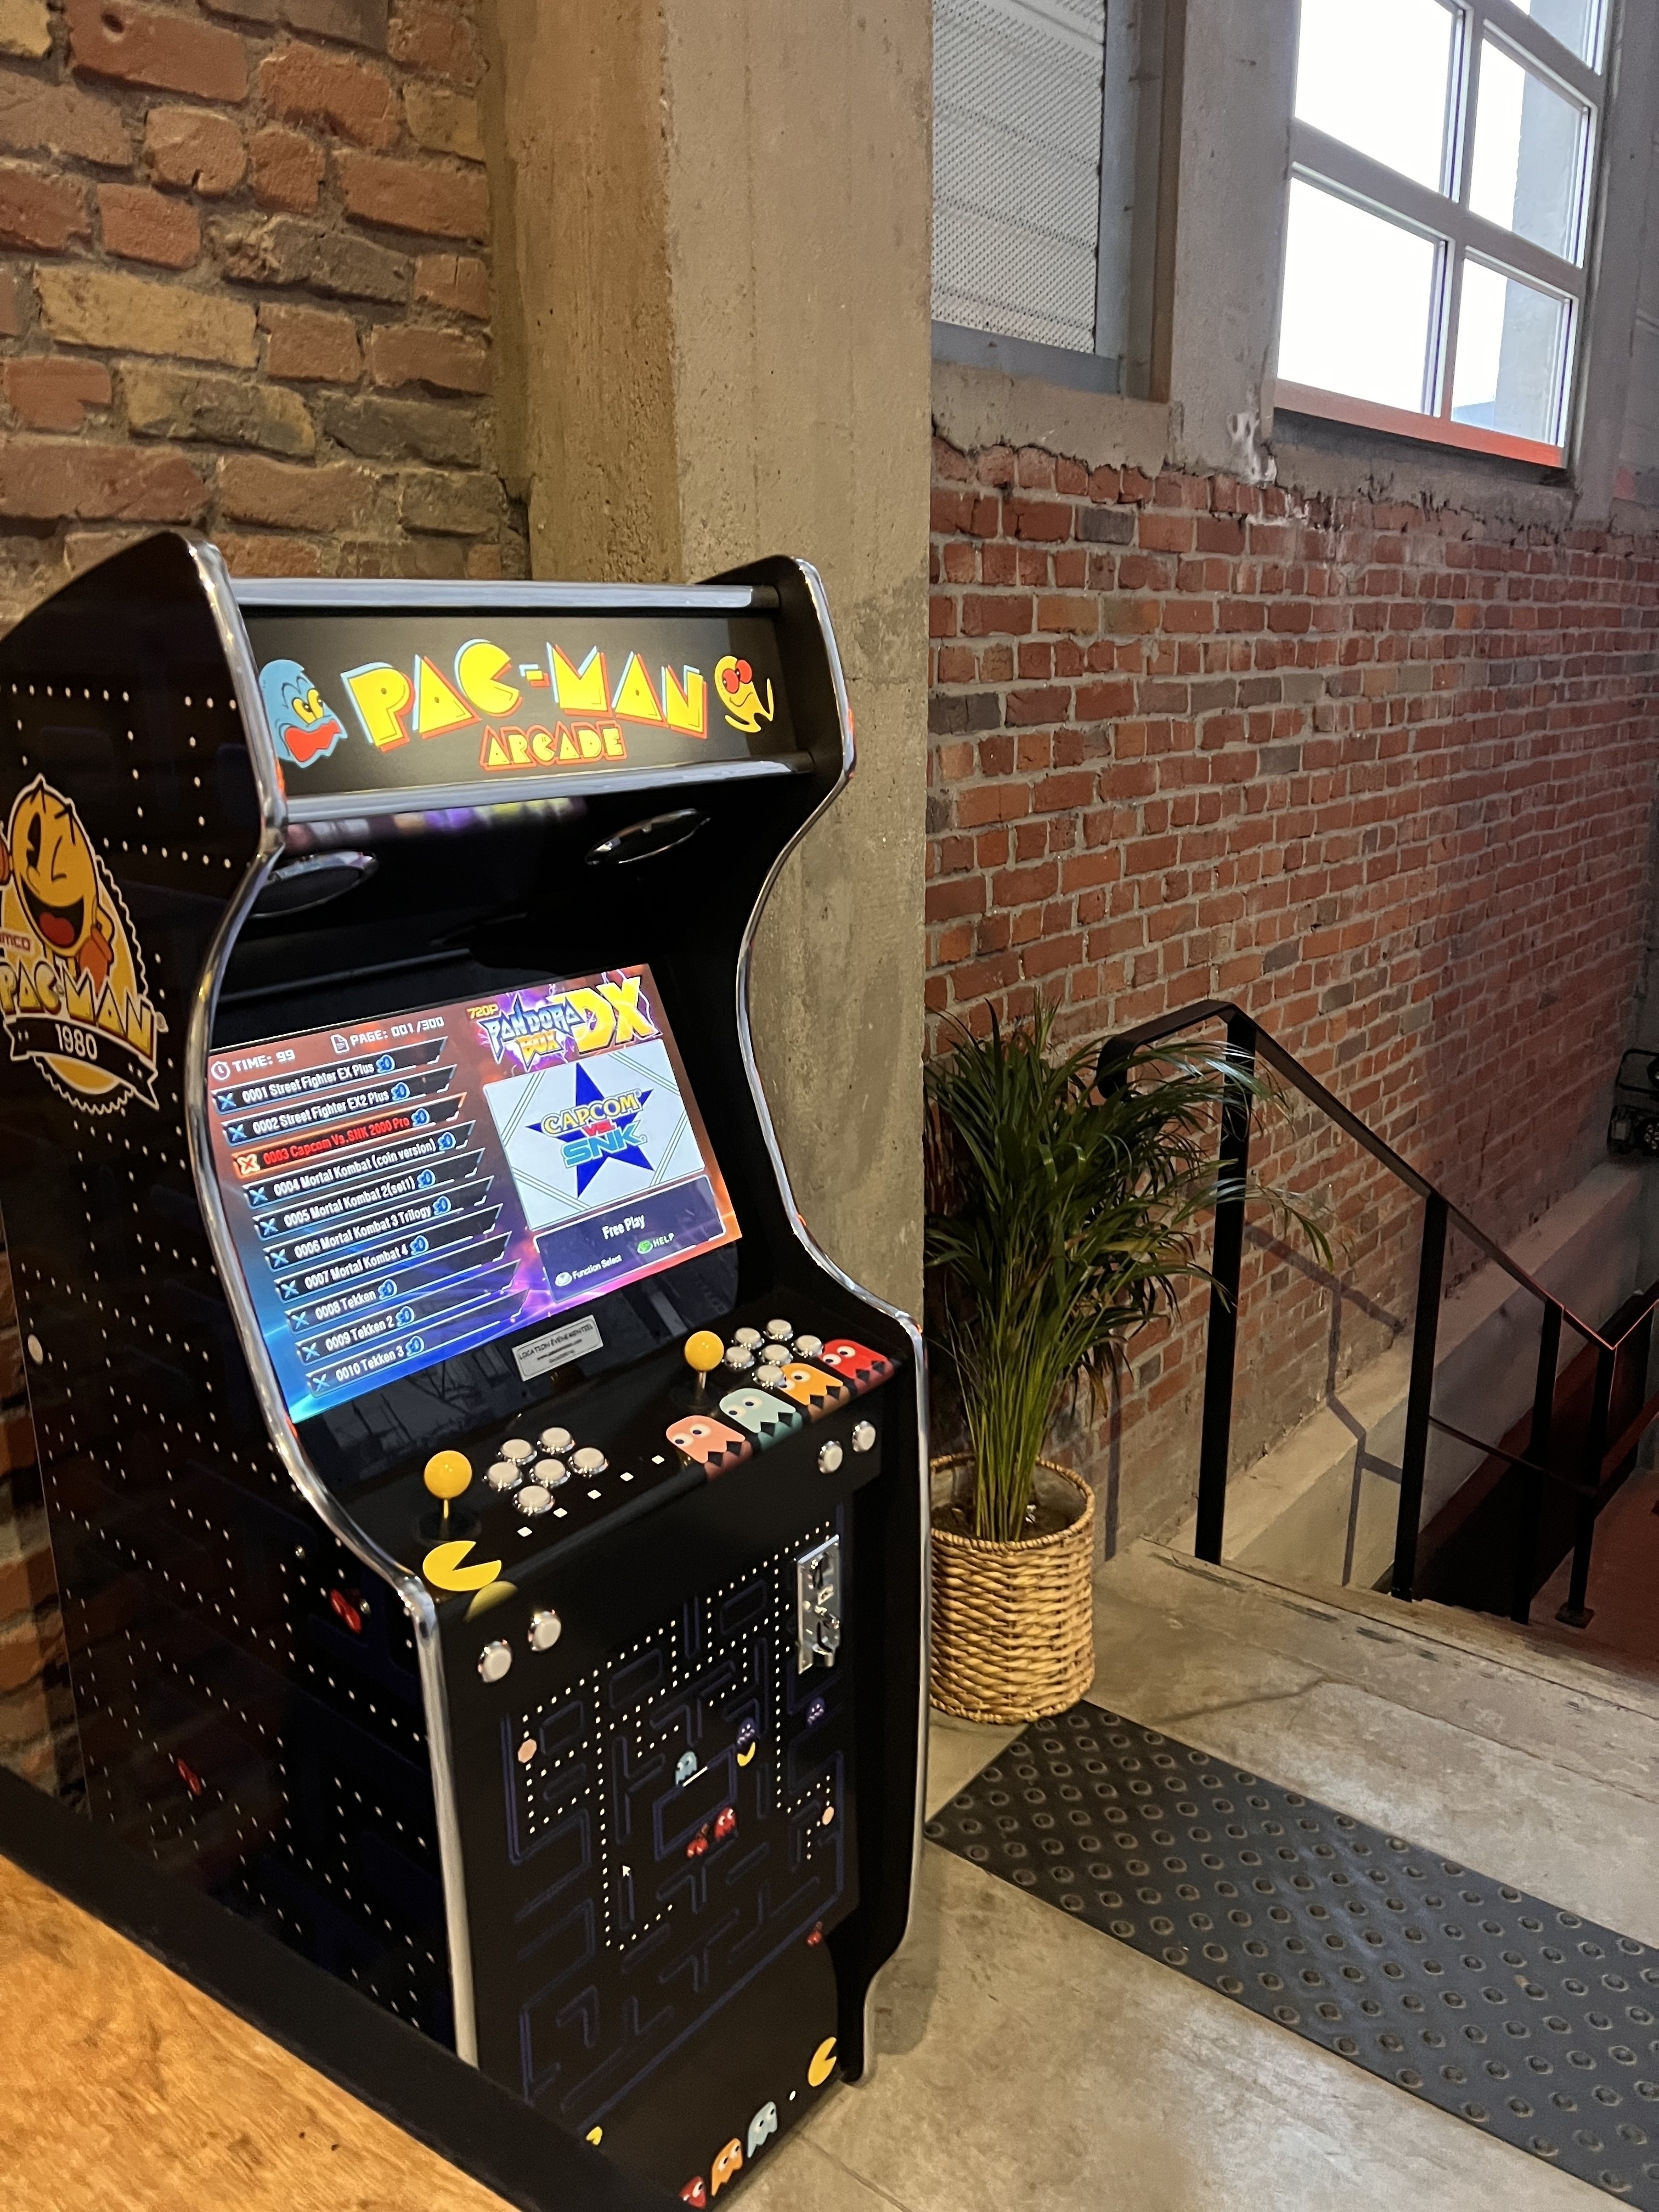 Borne arcade PaC Man 2022